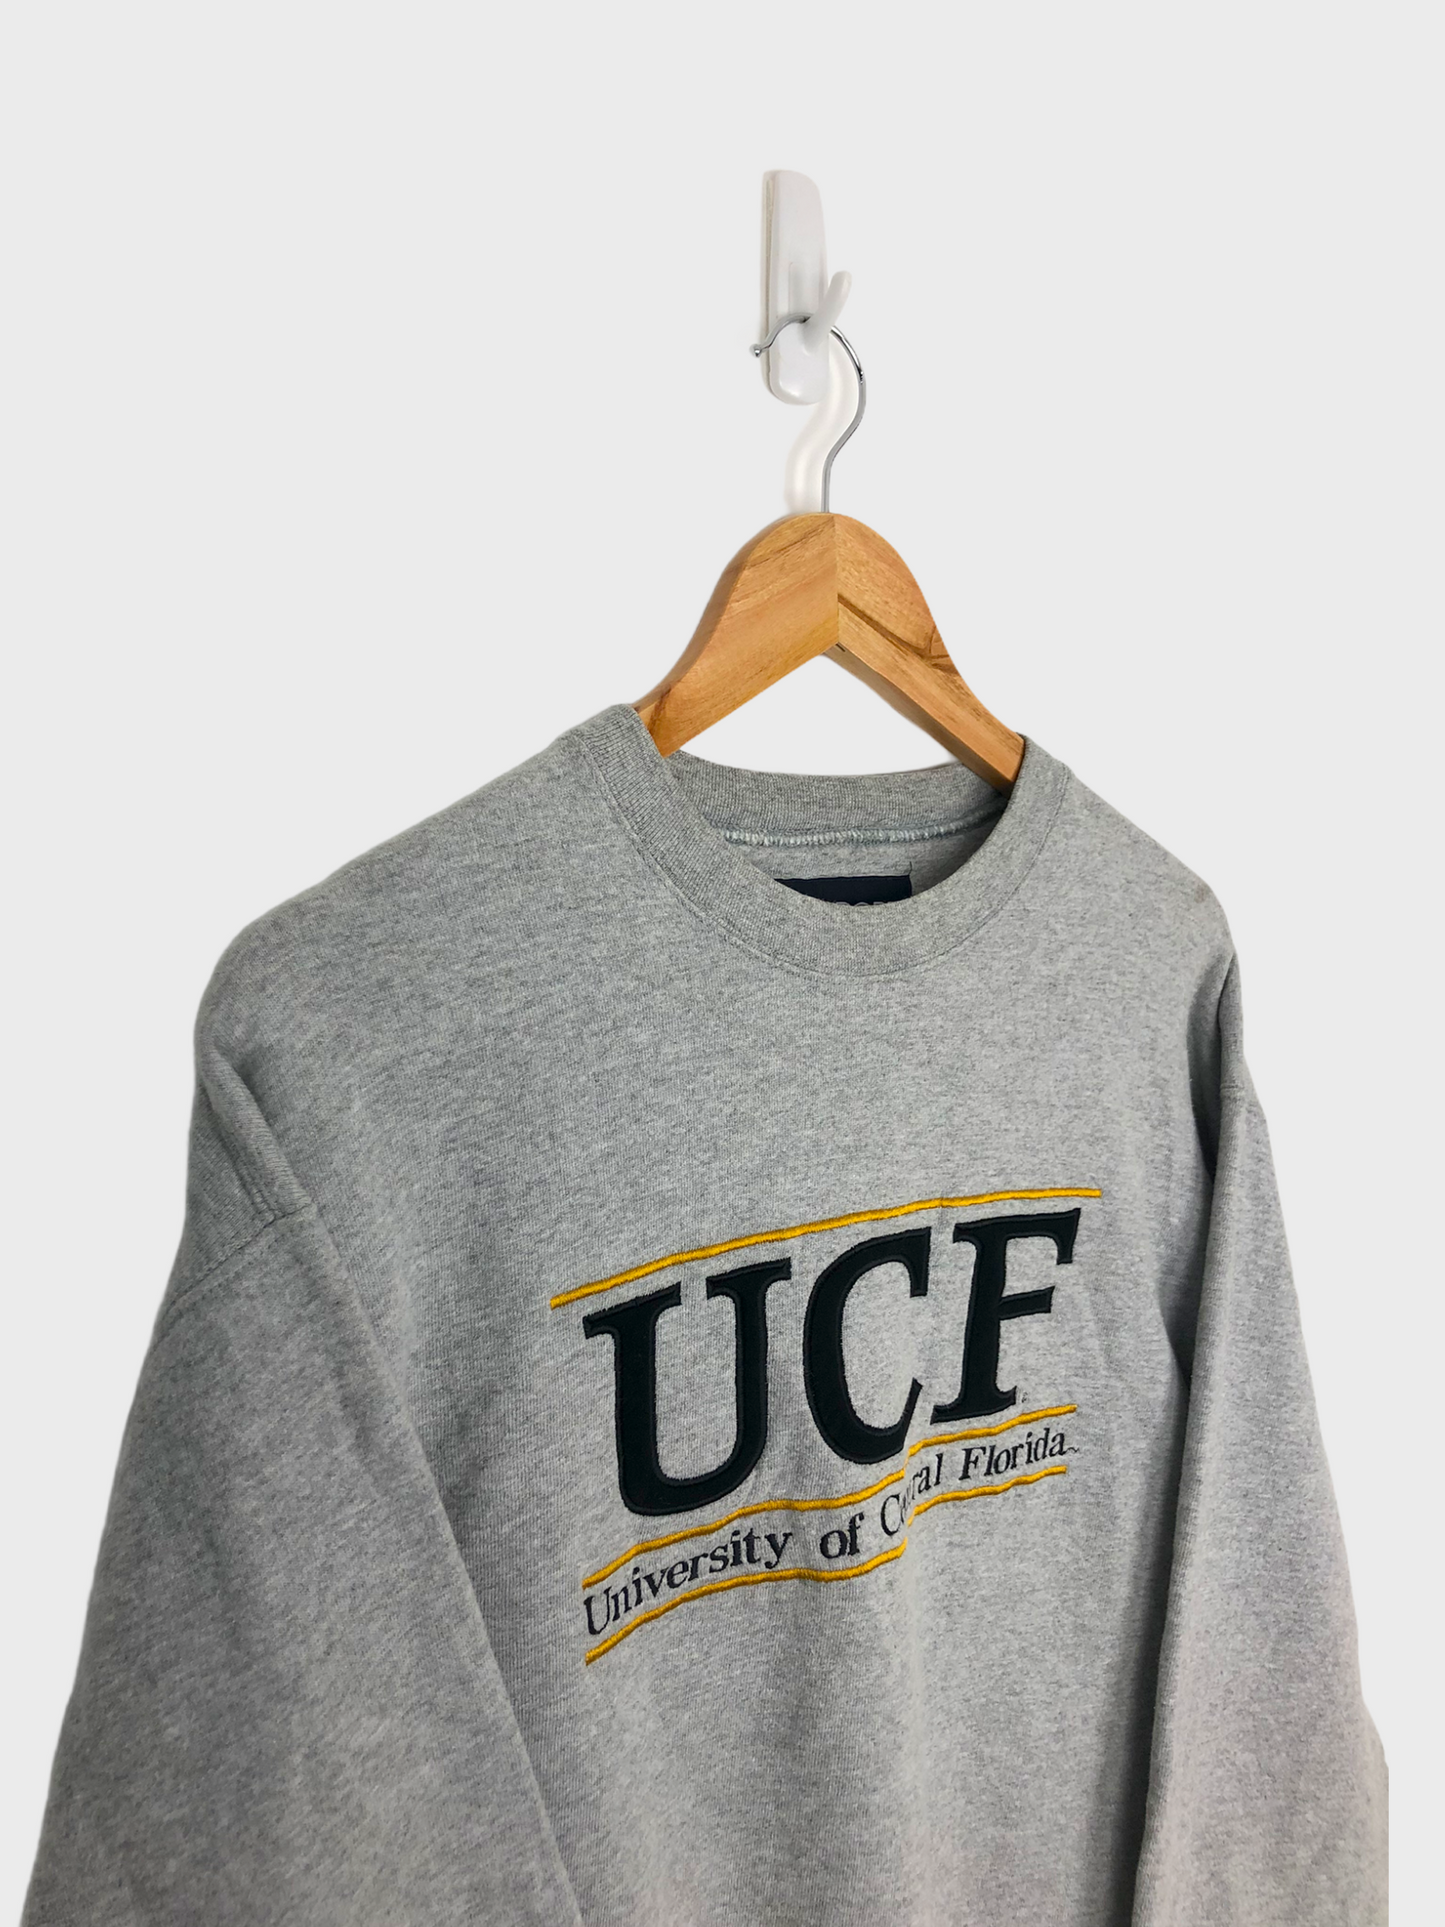 90's Central Florida Embroidered Vintage Sweatshirt Size 10-12